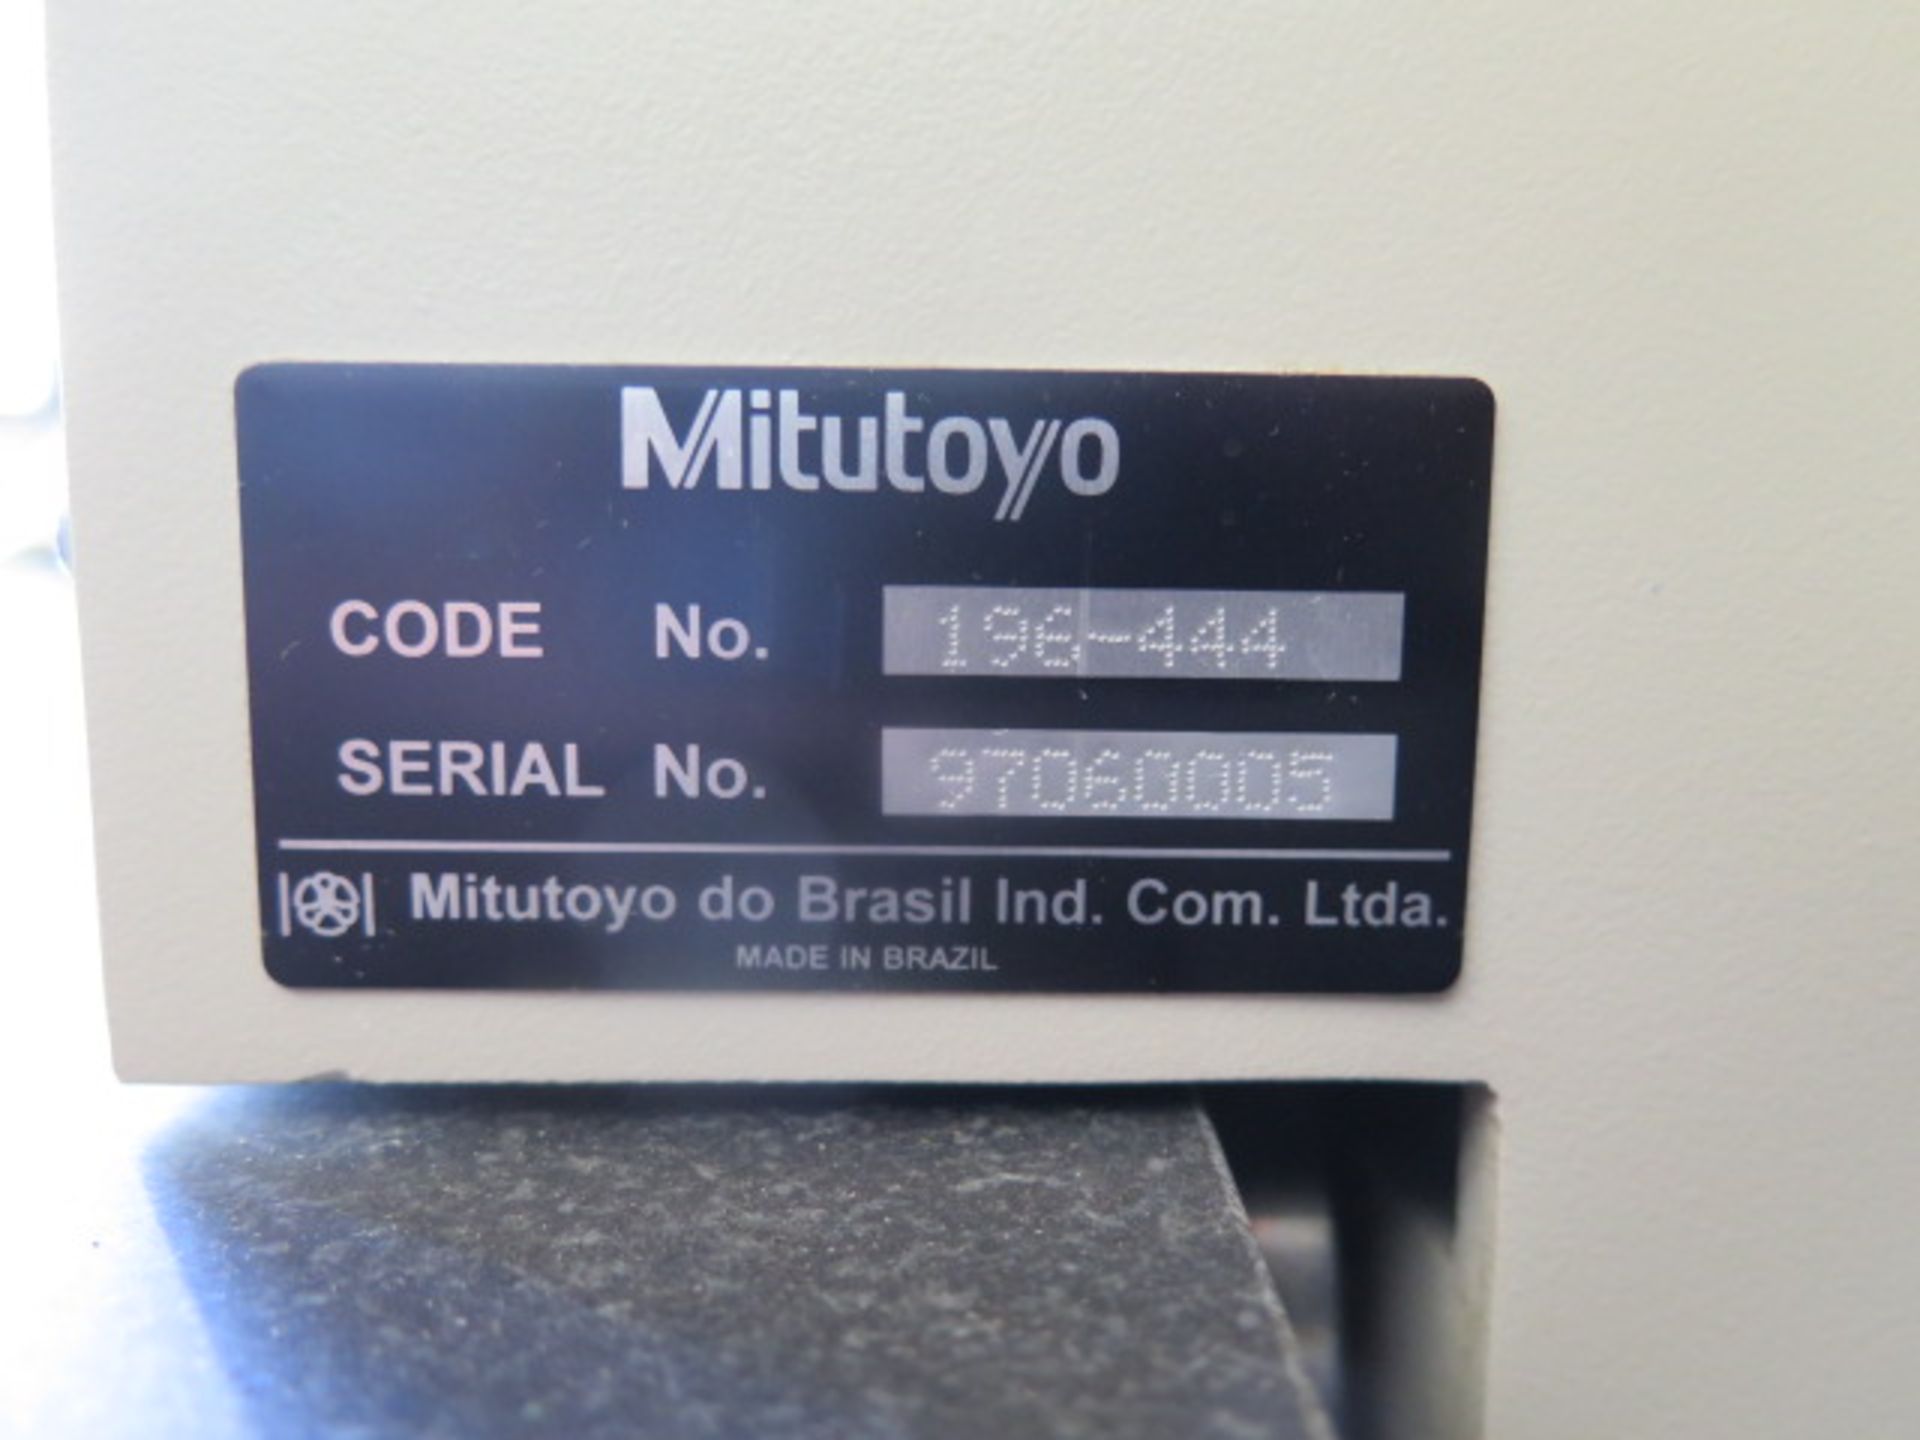 Mitutoyo “Bright-M” BRM507 CMM Machine s/n 97060005 w/ Renishaw MIP Probe Head, SOLD AS IS - Image 16 of 16